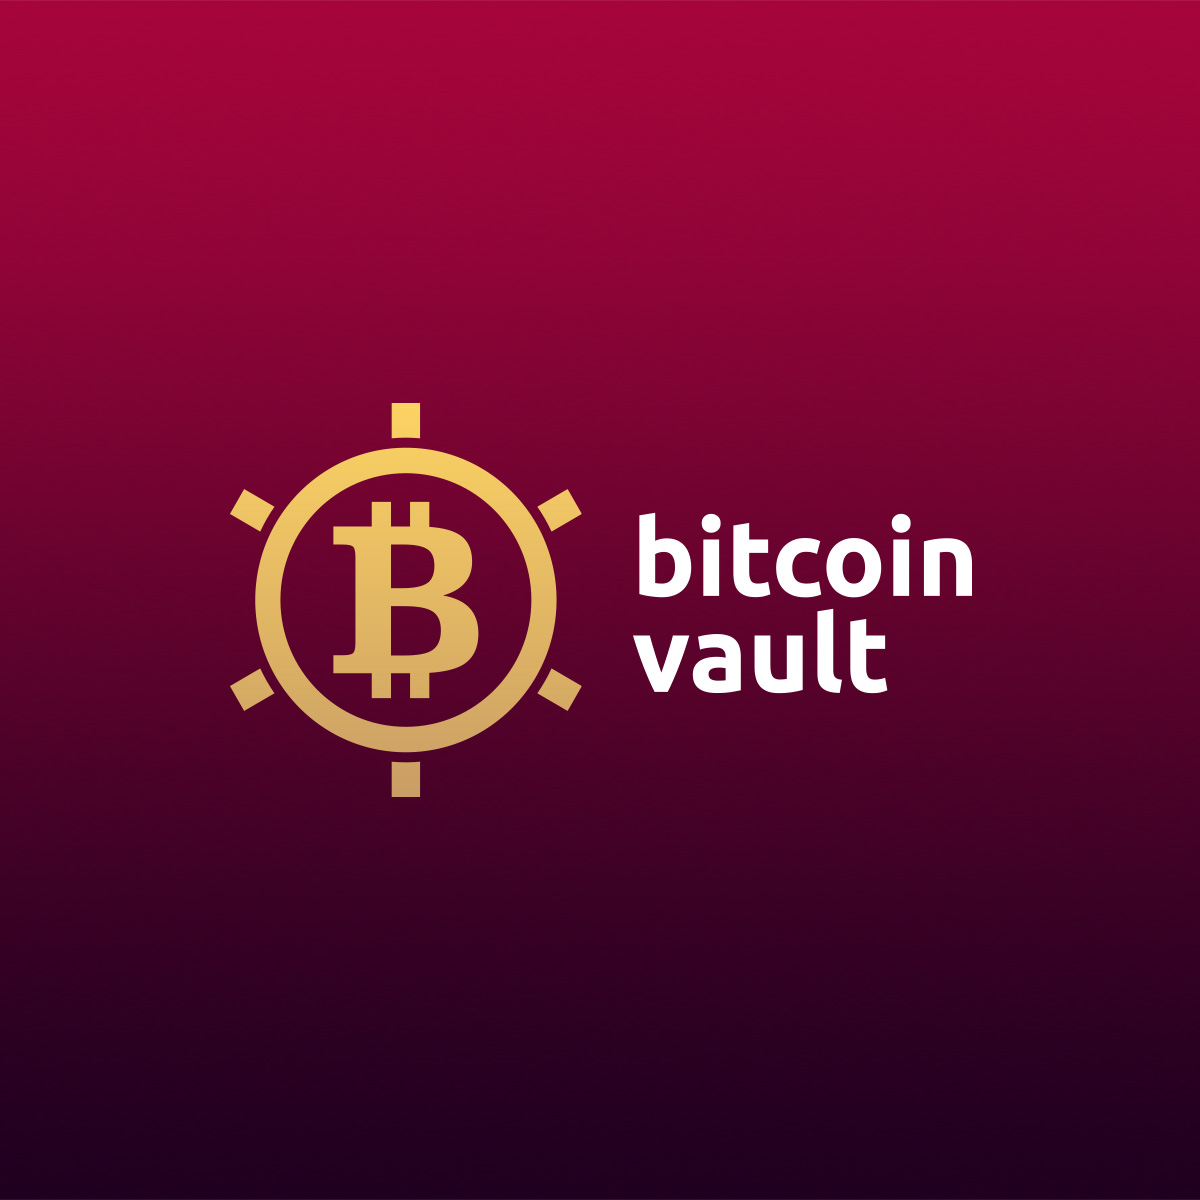 Bitcoin valt cryptocurrency exchange open source frontend